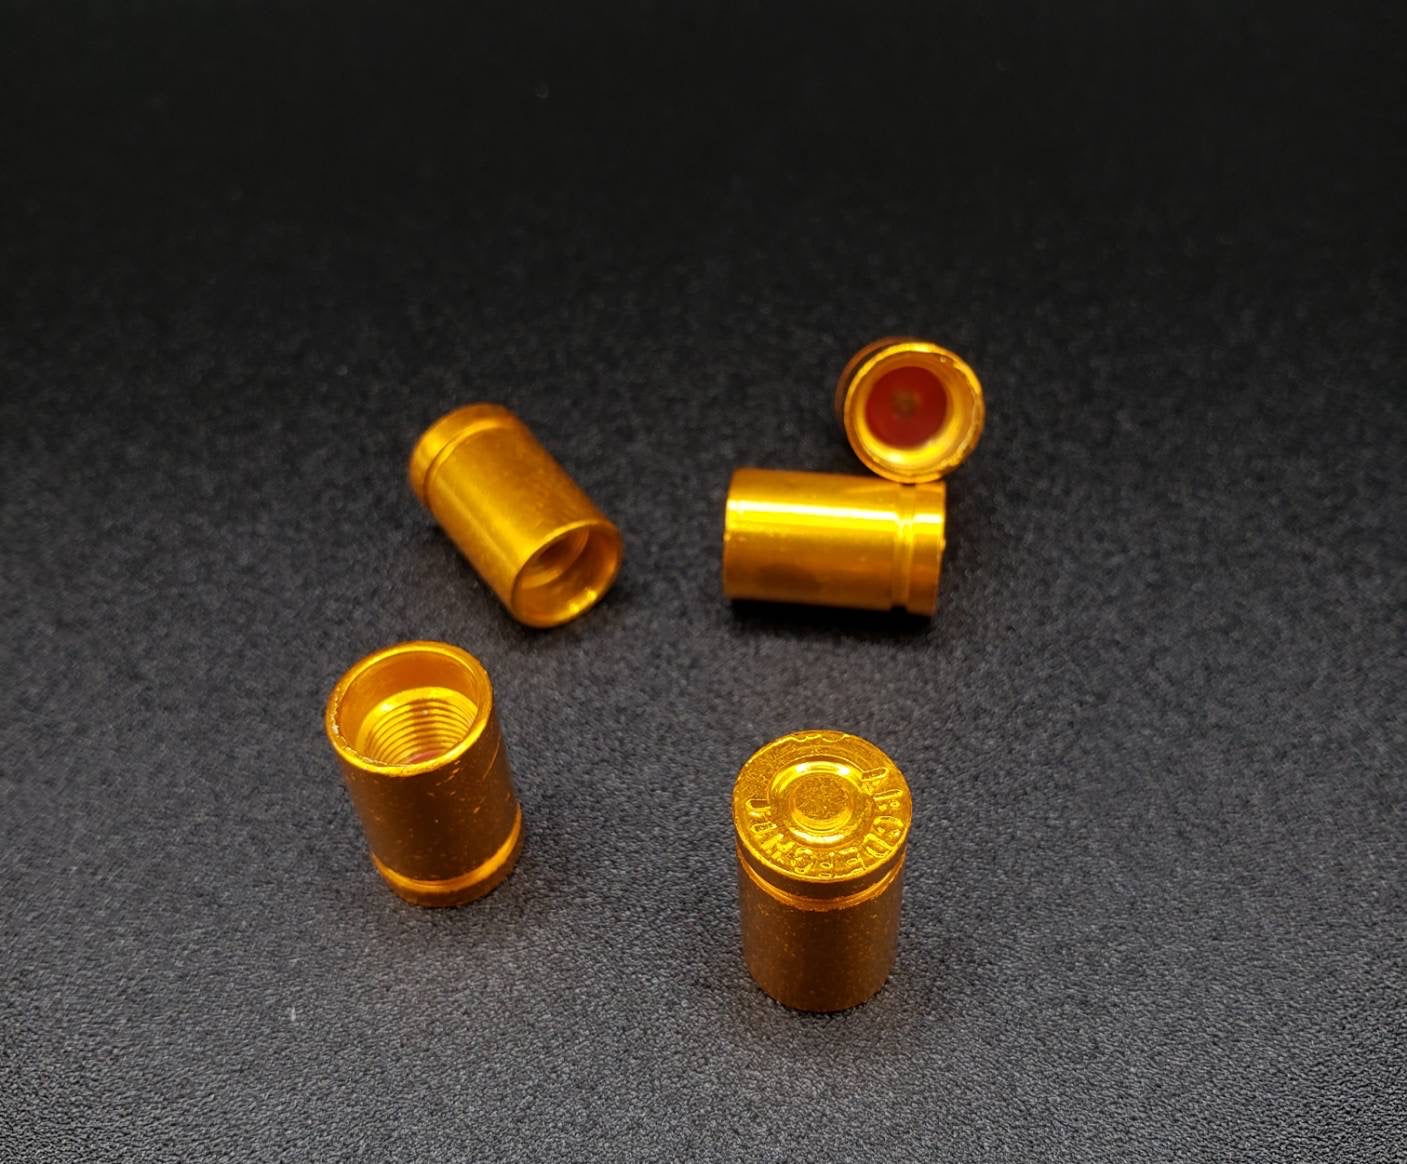 Metal bullet shell casing wheel tire valve stem cap set of 5 choose your color